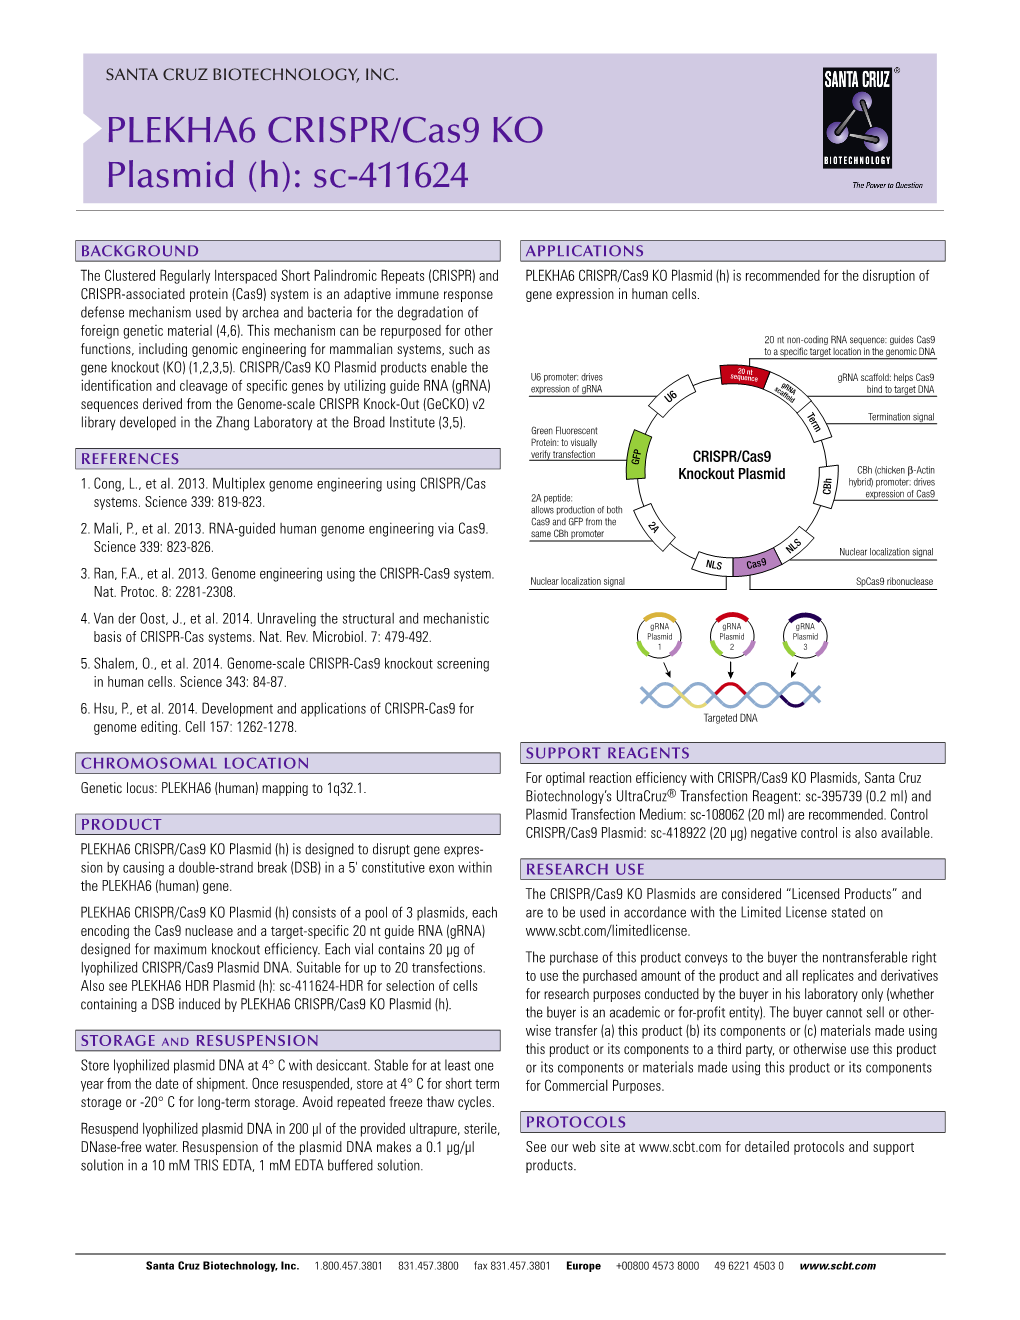 PLEKHA6 CRISPR/Cas9 KO Plasmid (H): Sc-411624